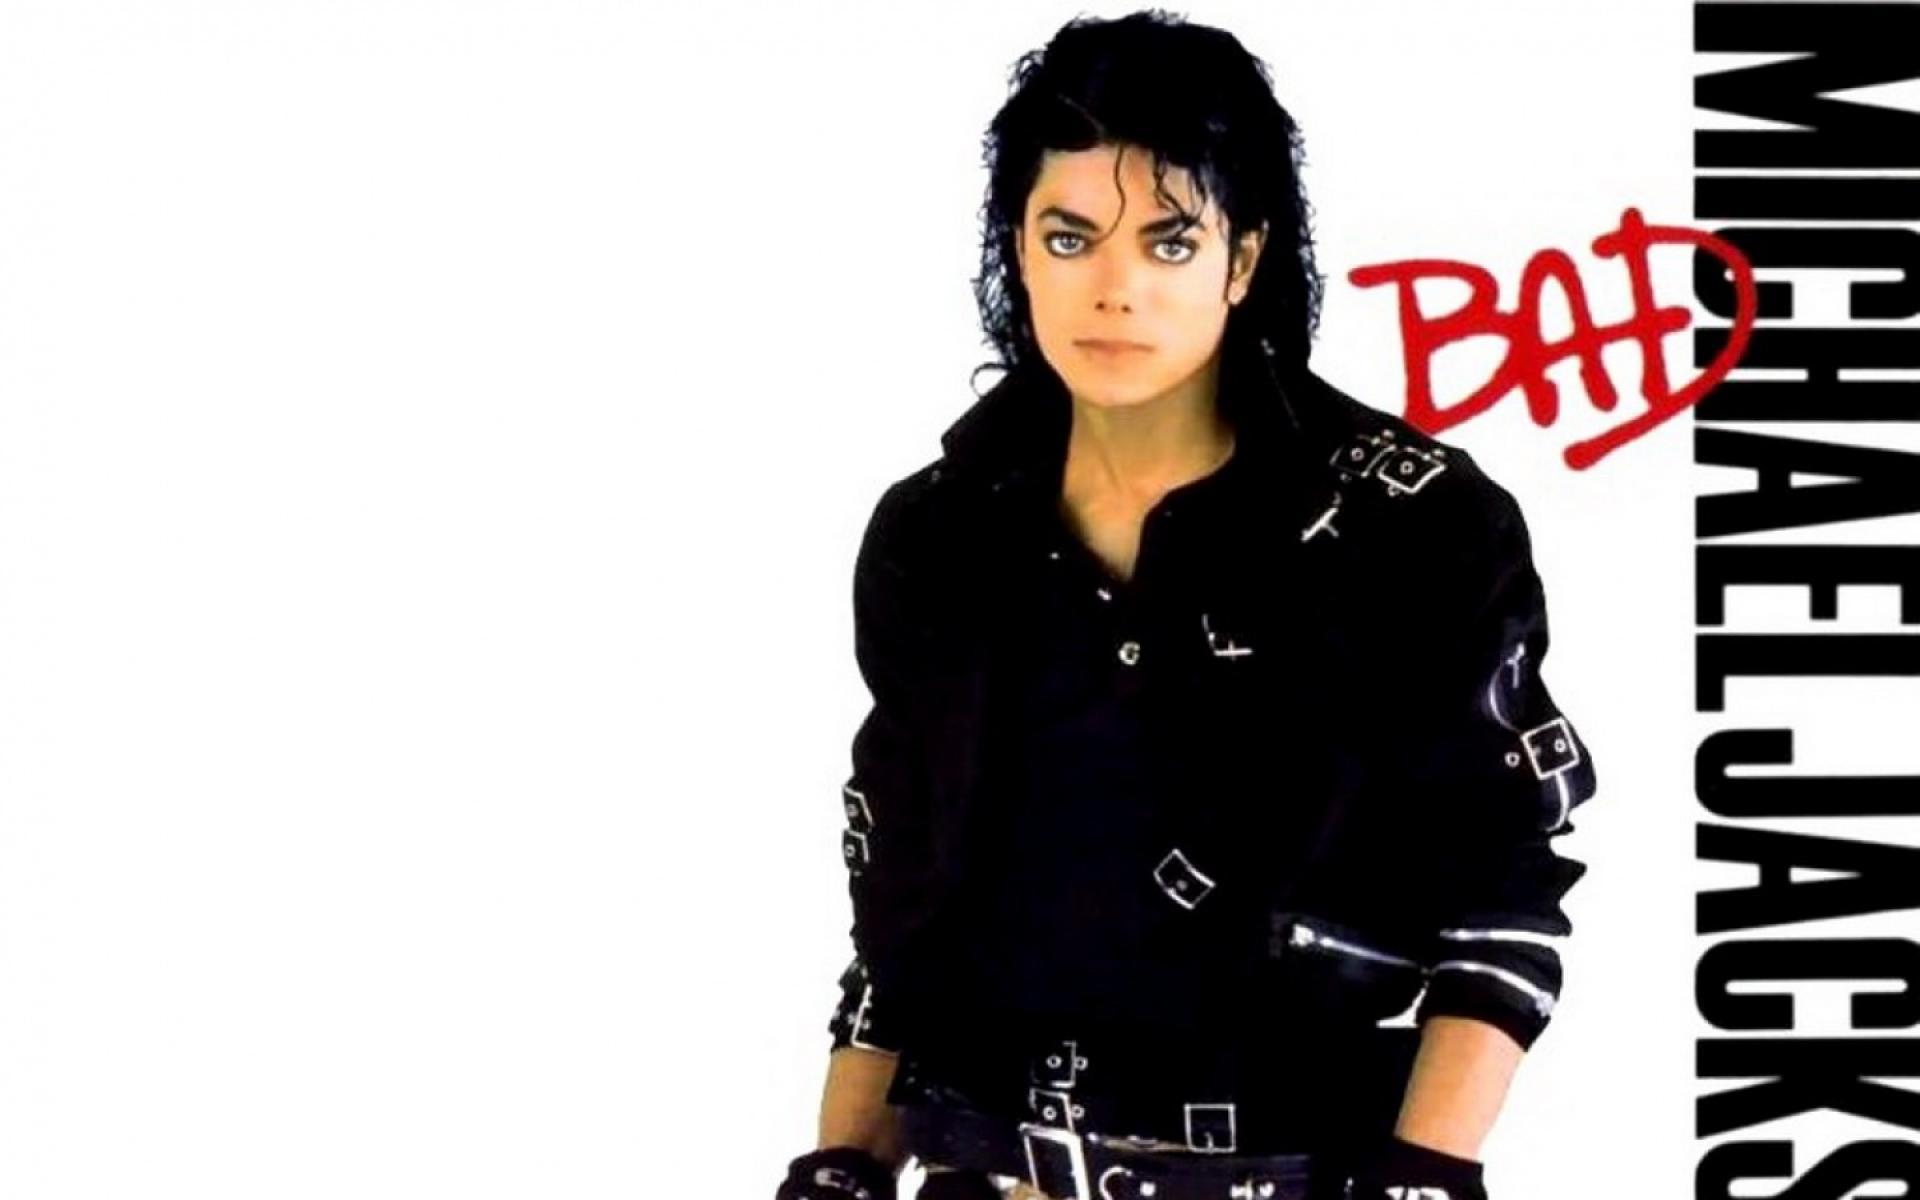 HD Michael Jackson Wallpaper Widescreen, for desktop and mobile